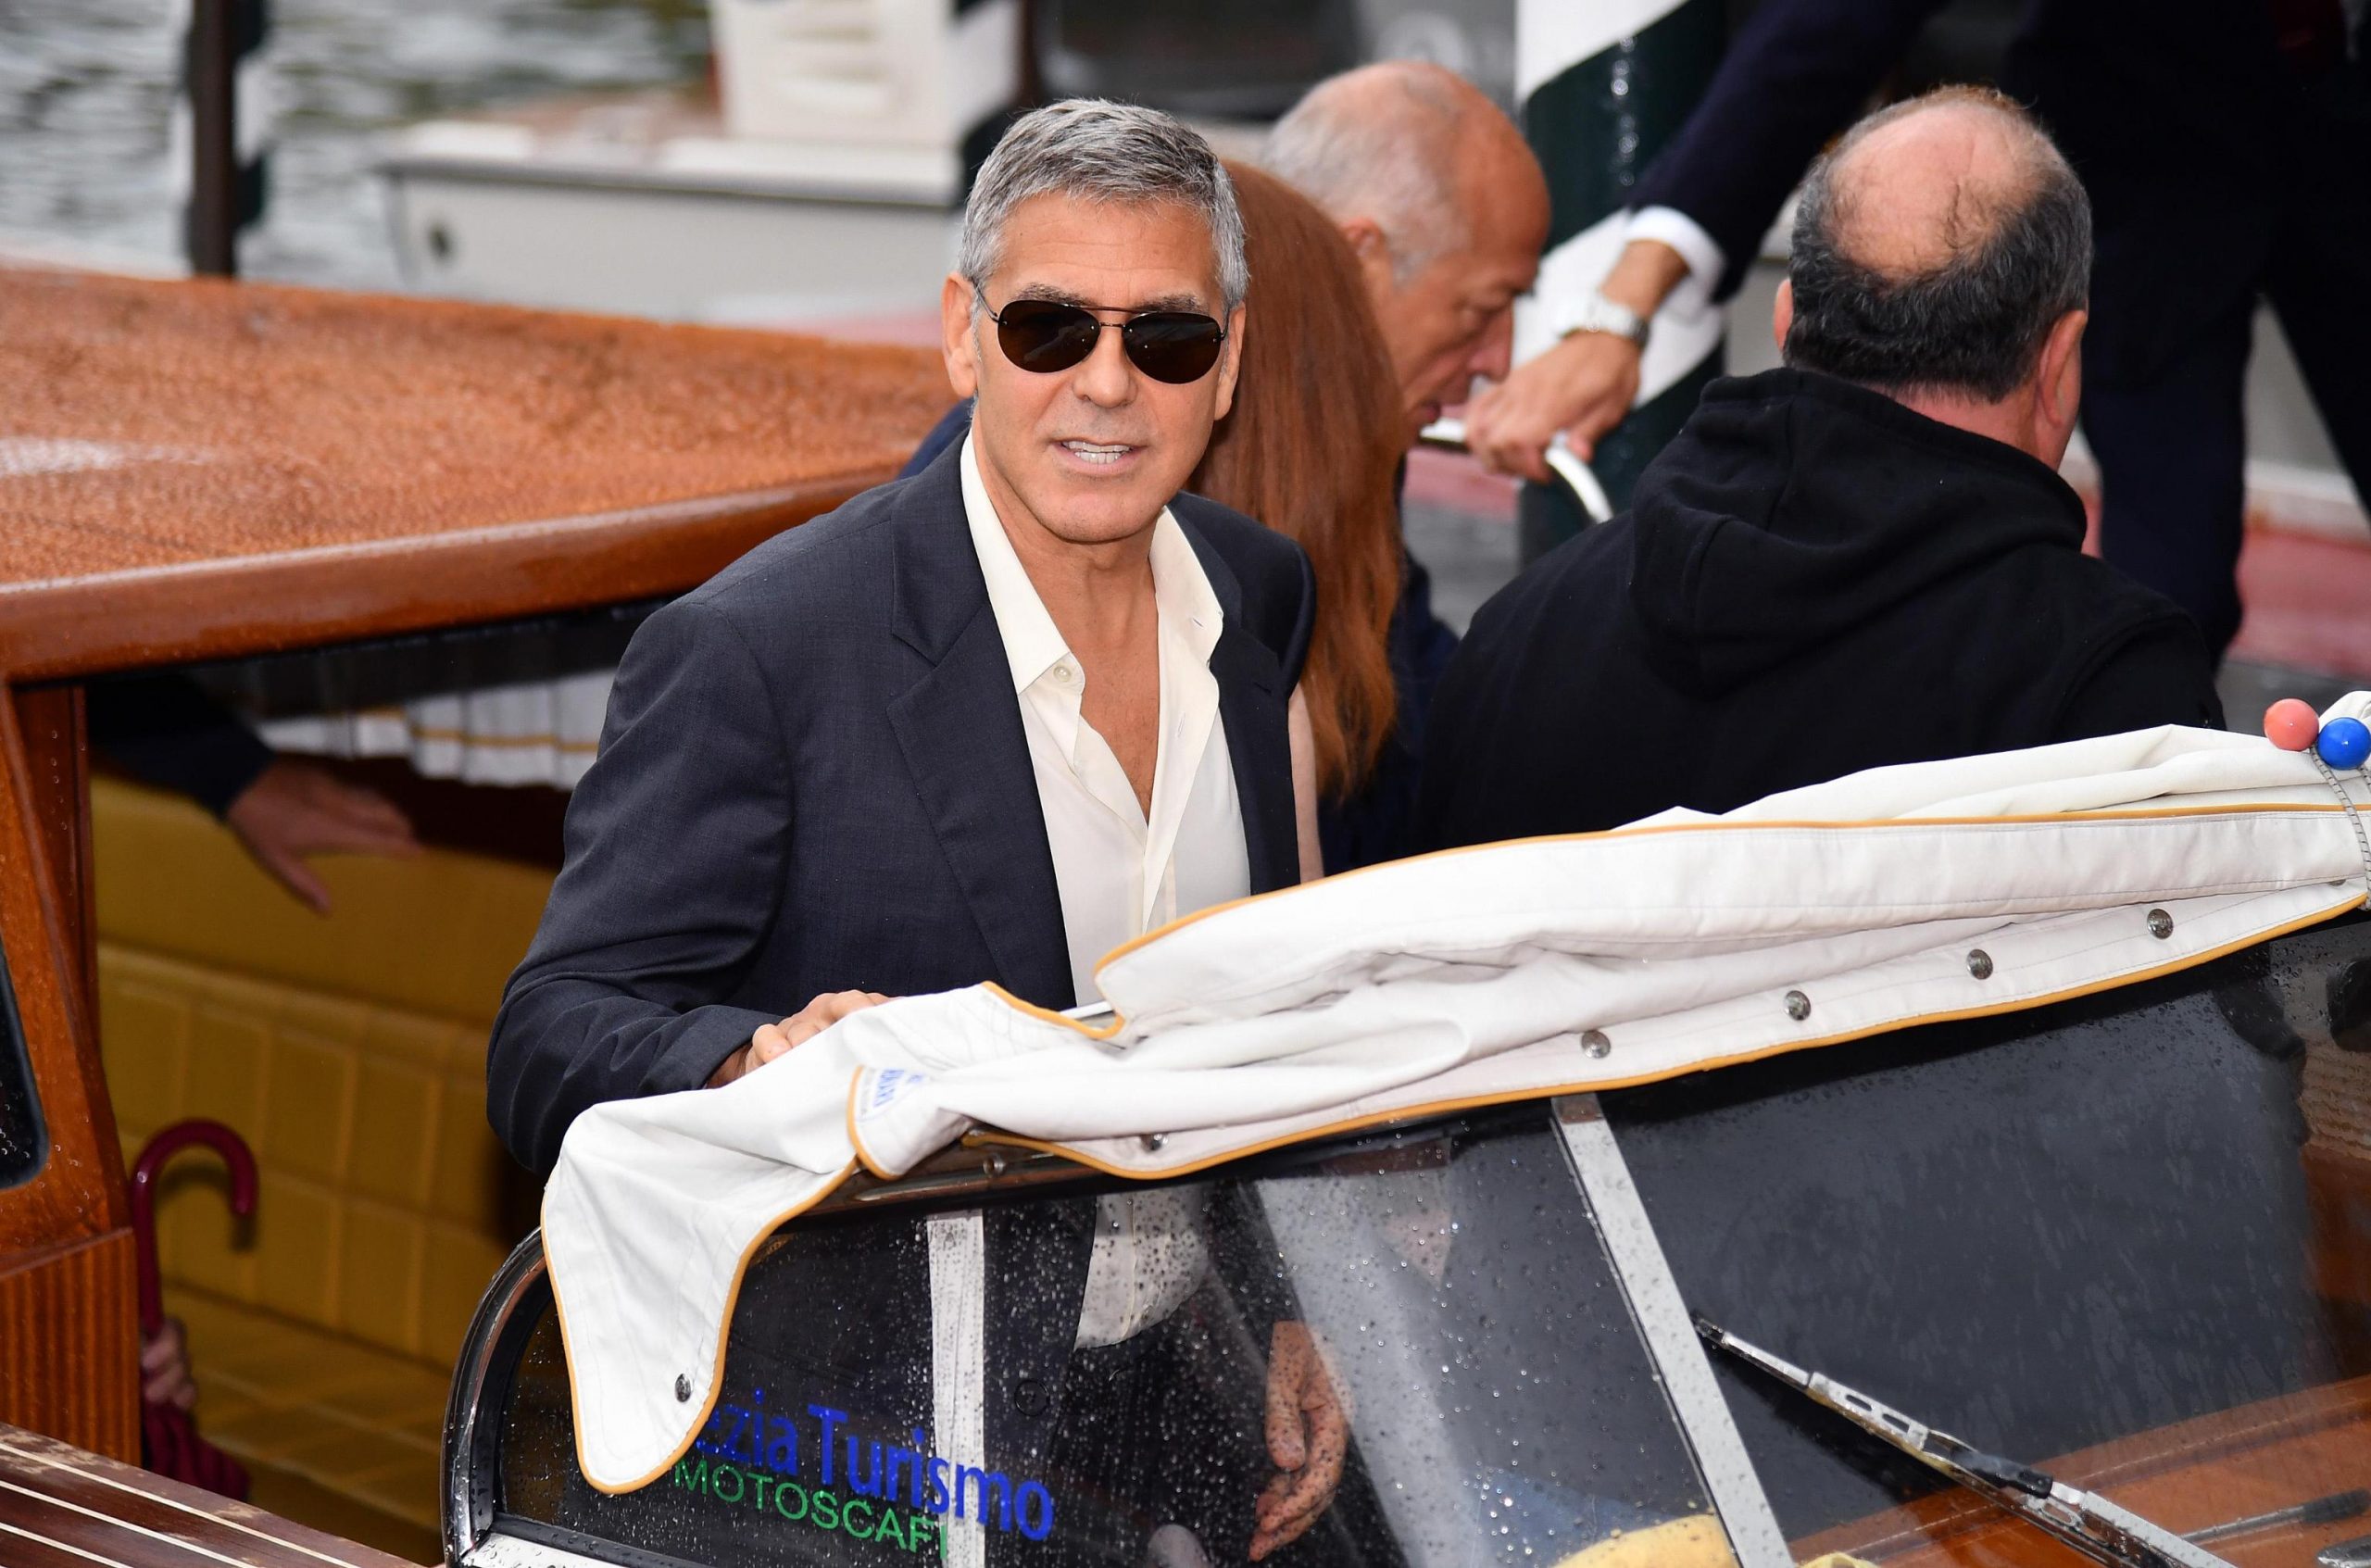 Festival di Venezia, l’arrivo di George Clooney e Amal Alamuddin con i gemelli